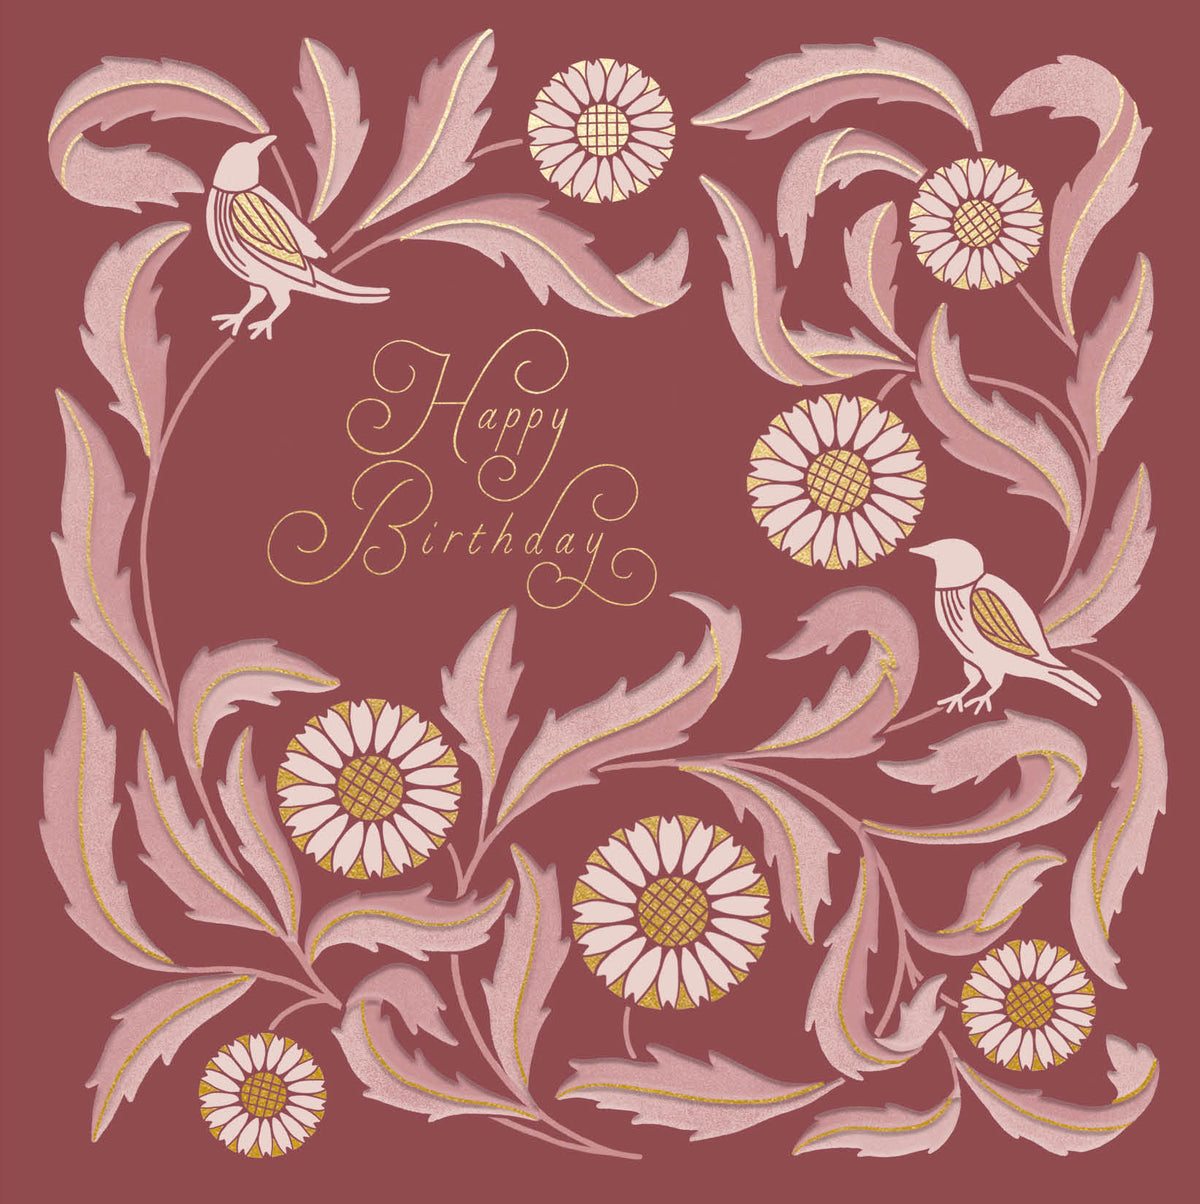 Burgundy Birds Botanical Heritage Birthday Card from Penny Black